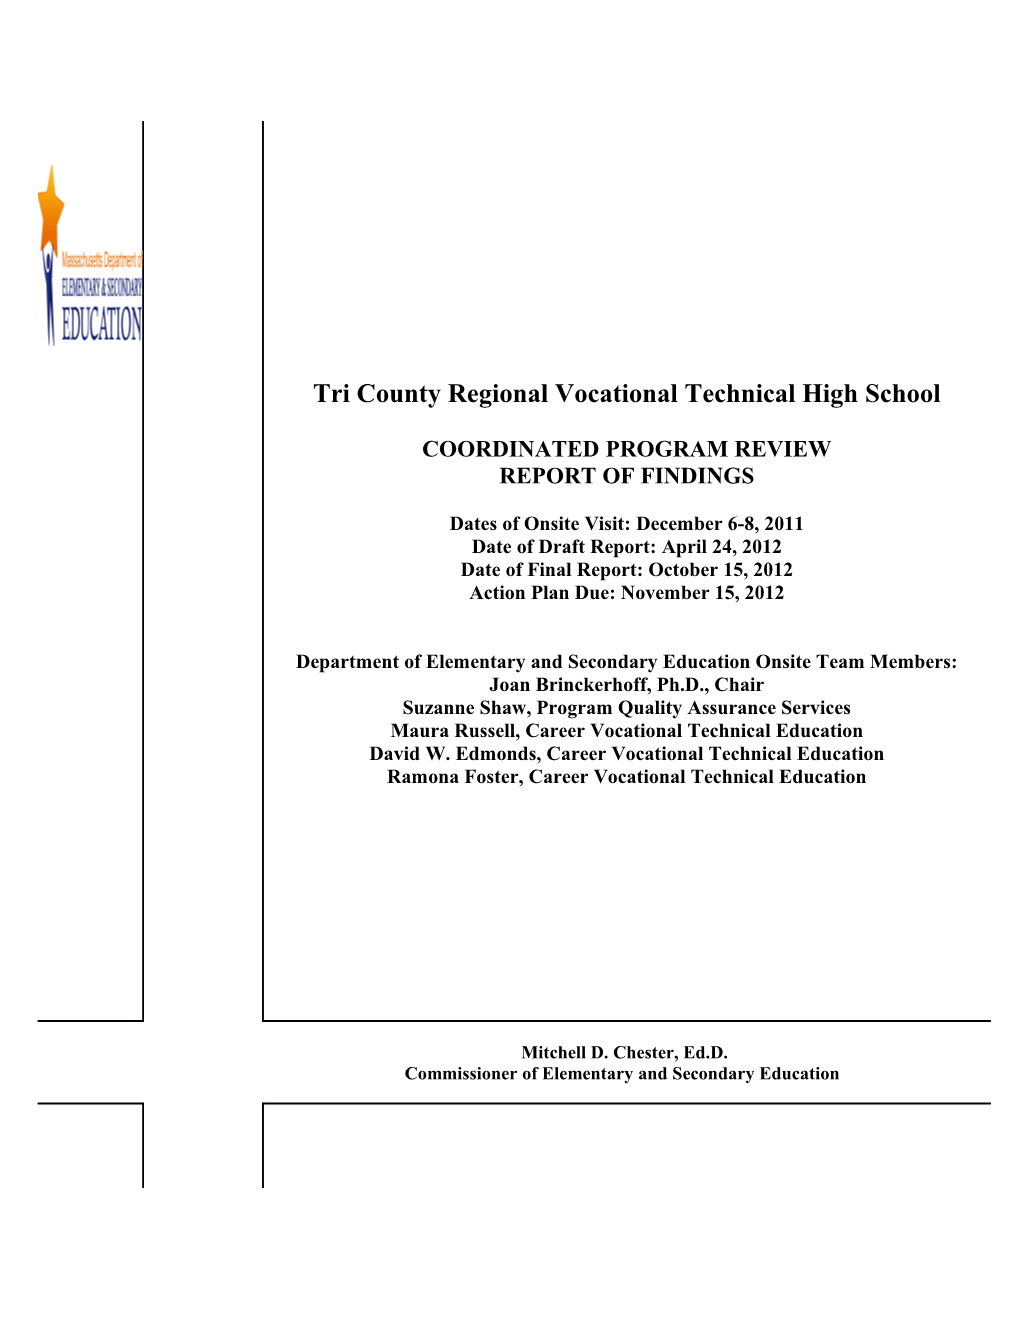 Tri County RVTS Final Report 2012